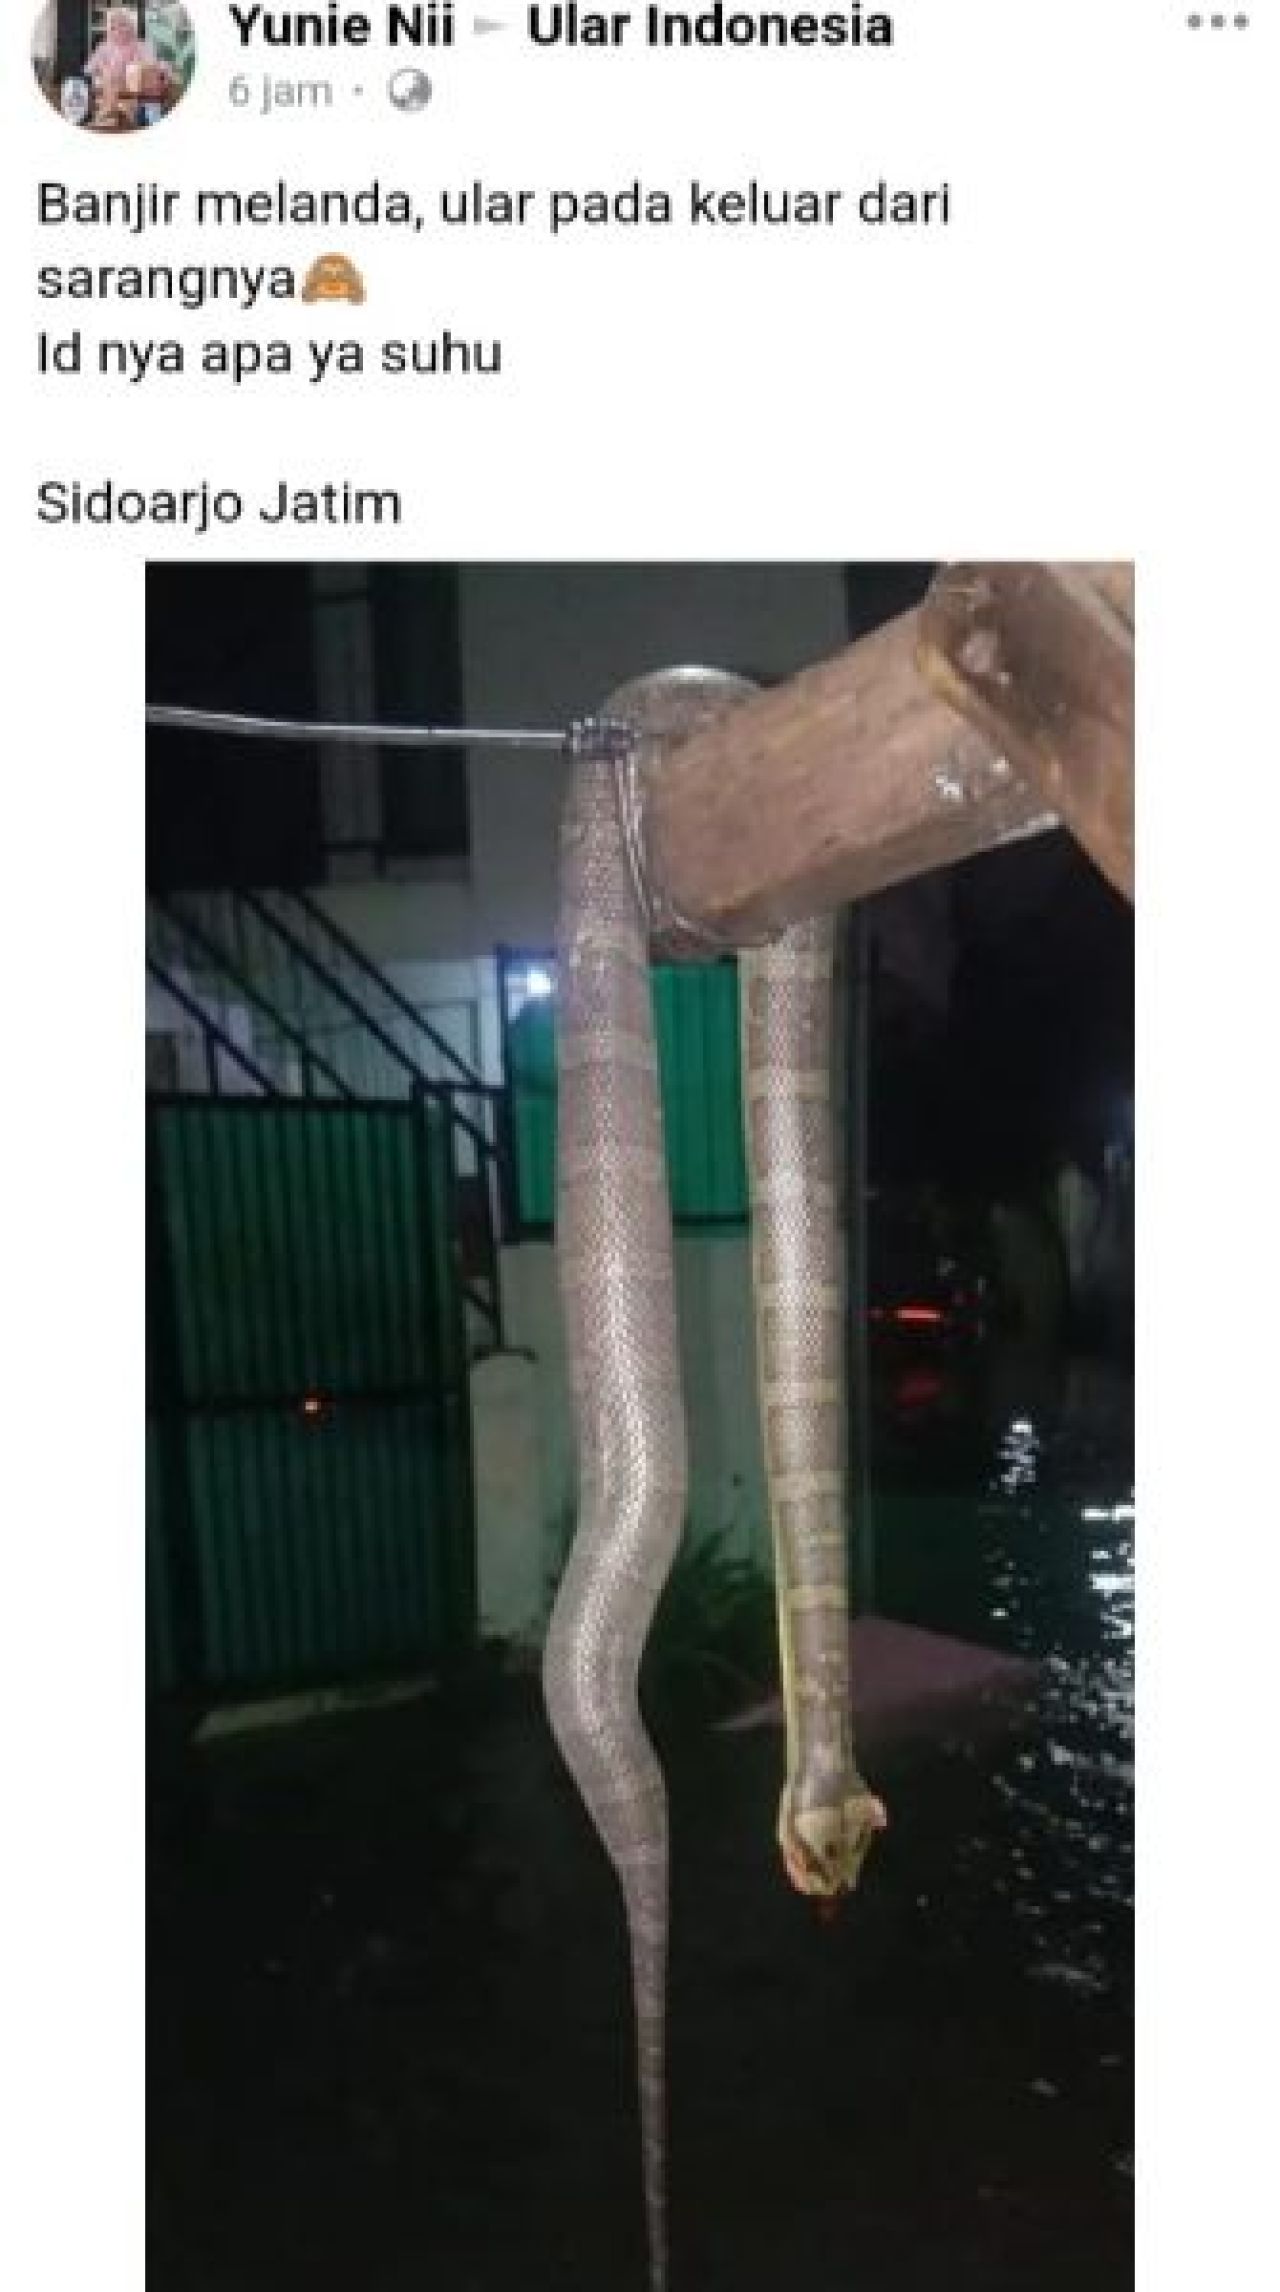 Akibat banjir di Sidoarjo, ular pun keluar dari sarangnya.